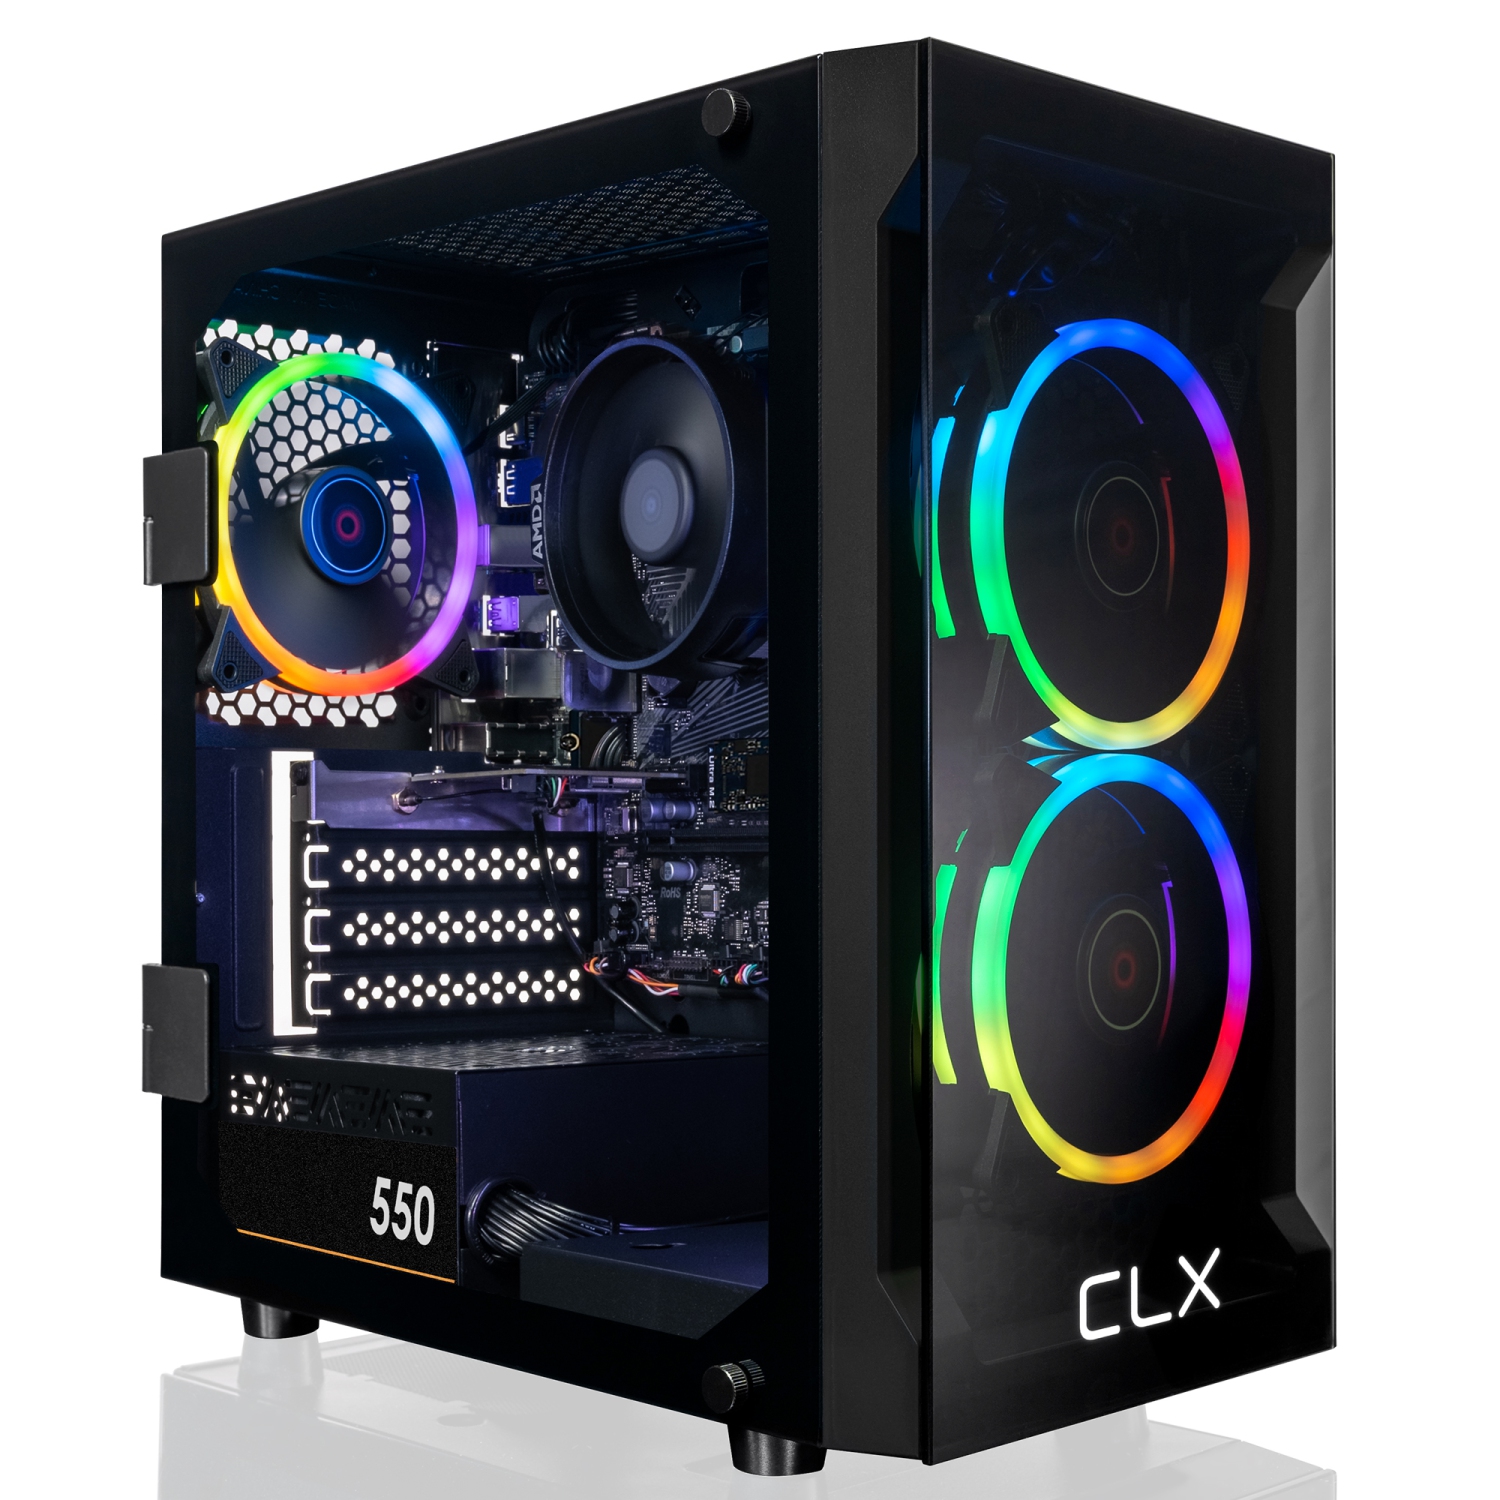 CLX SET Gaming Desktop - AMD Ryzen 7 5700G 3.8GHz 8-Core, 16GB DDR4, Radeon Vega 8 2GB Shared Graphics, 1TB SSD, WiFi, Windows 11 Home 64-bit